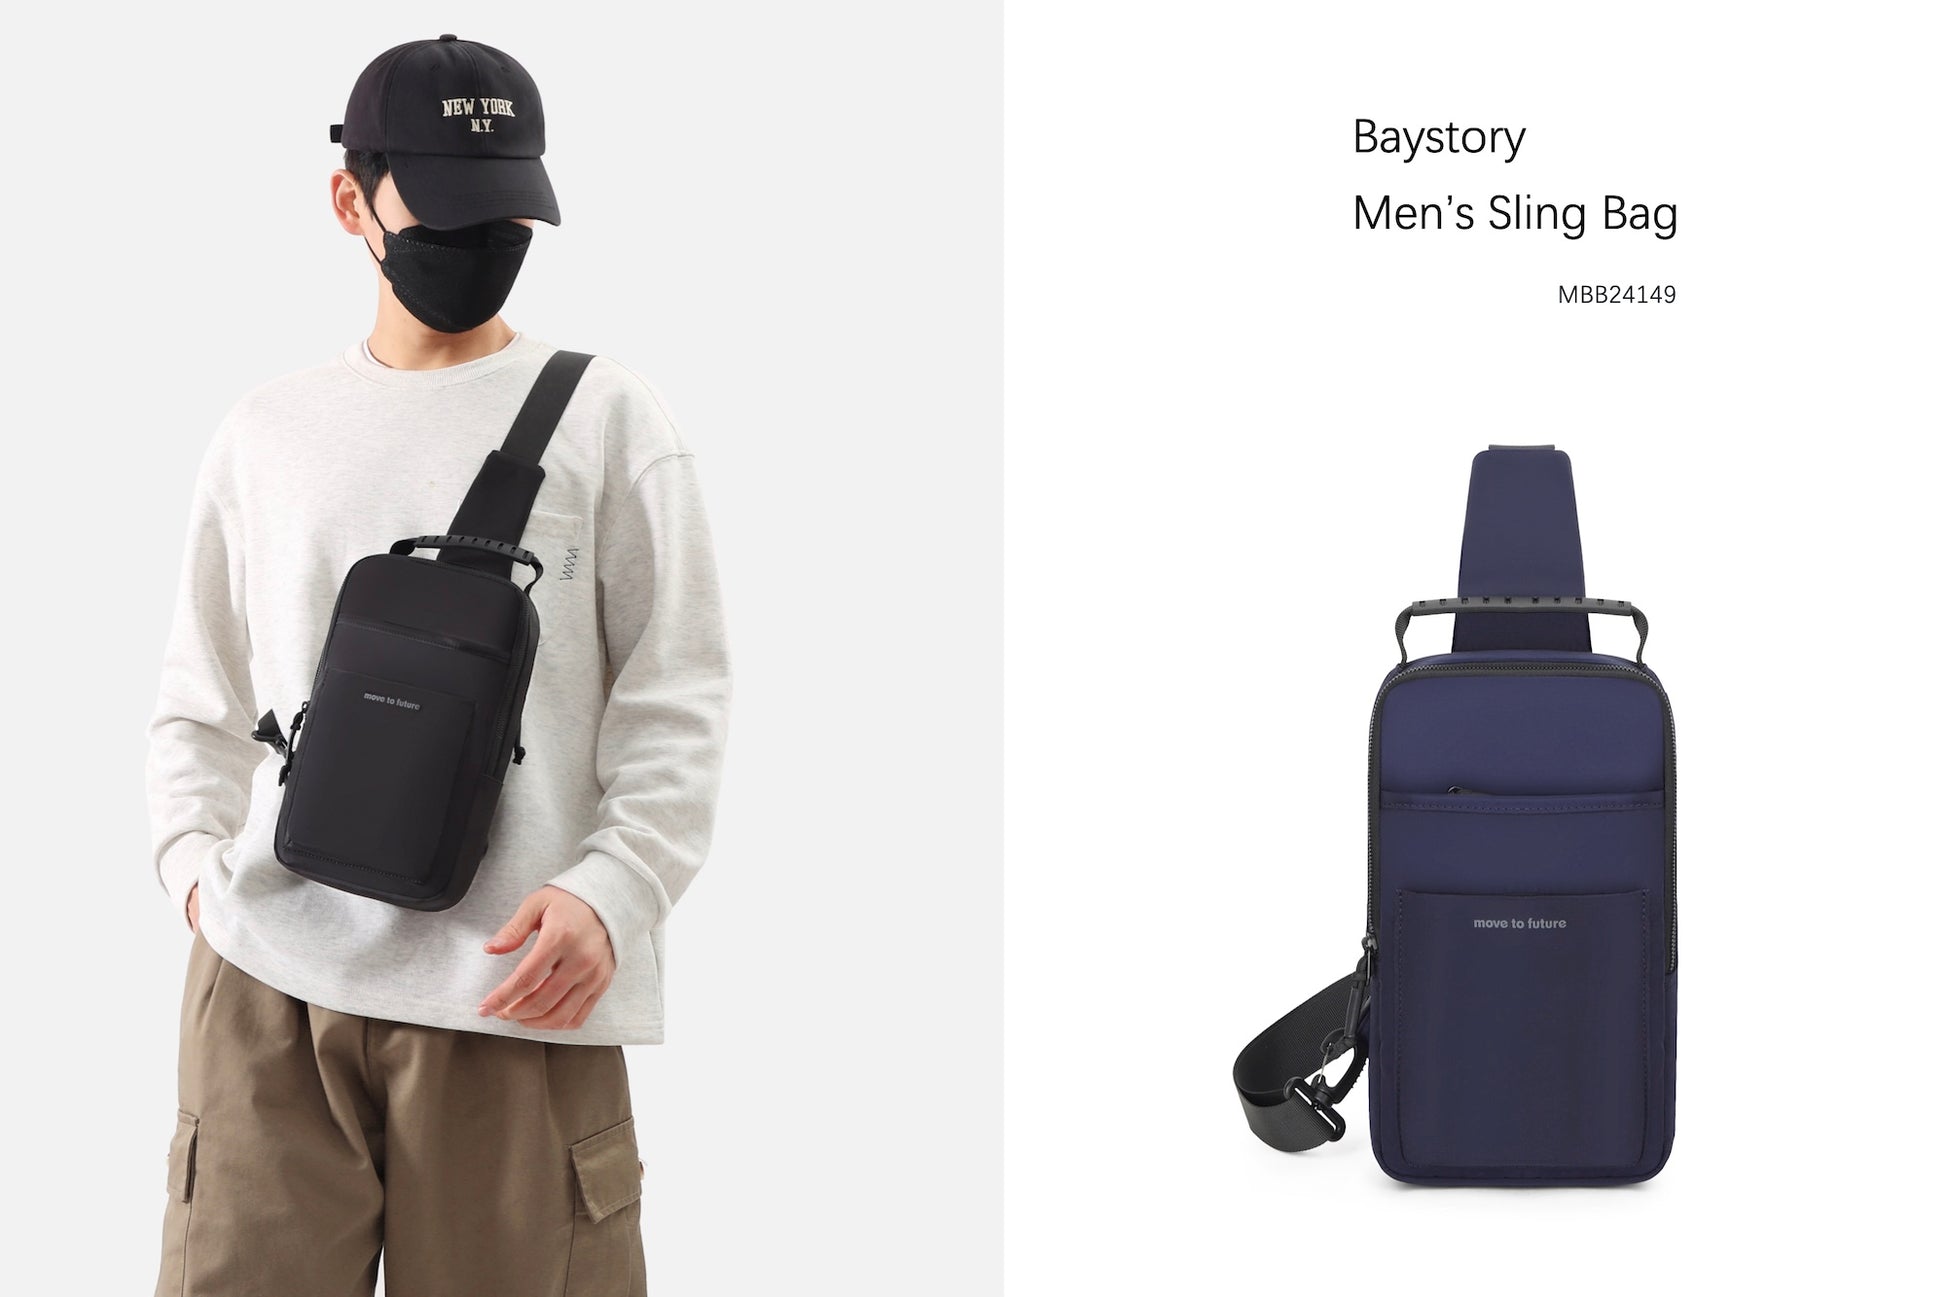 Men's Sling Bag MBB24149 - Baystory